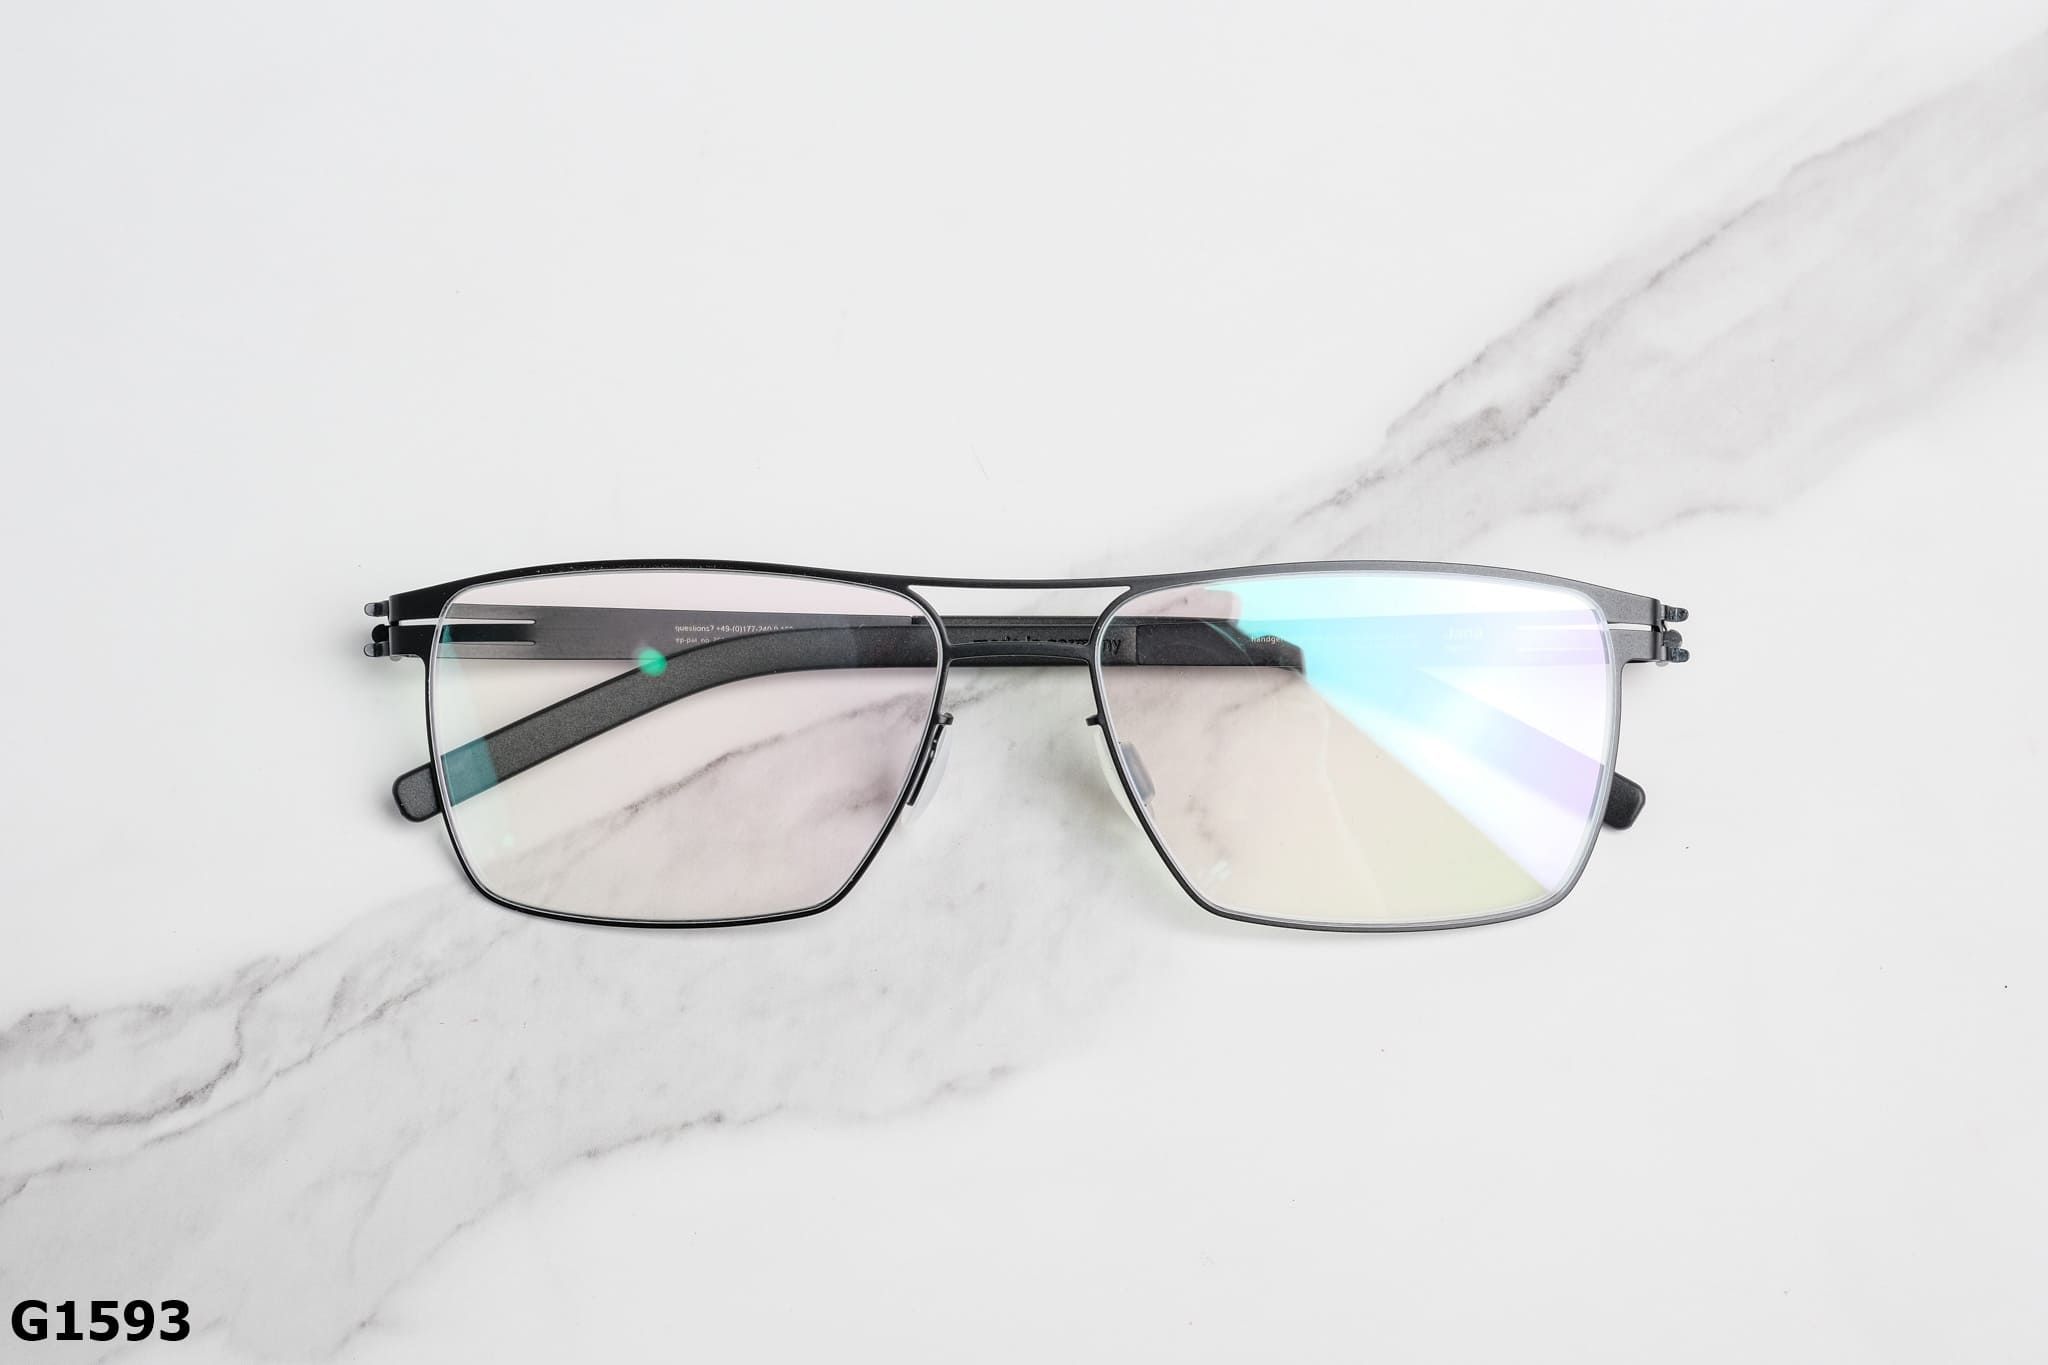  IC Eyewear - Glasses - G1593 